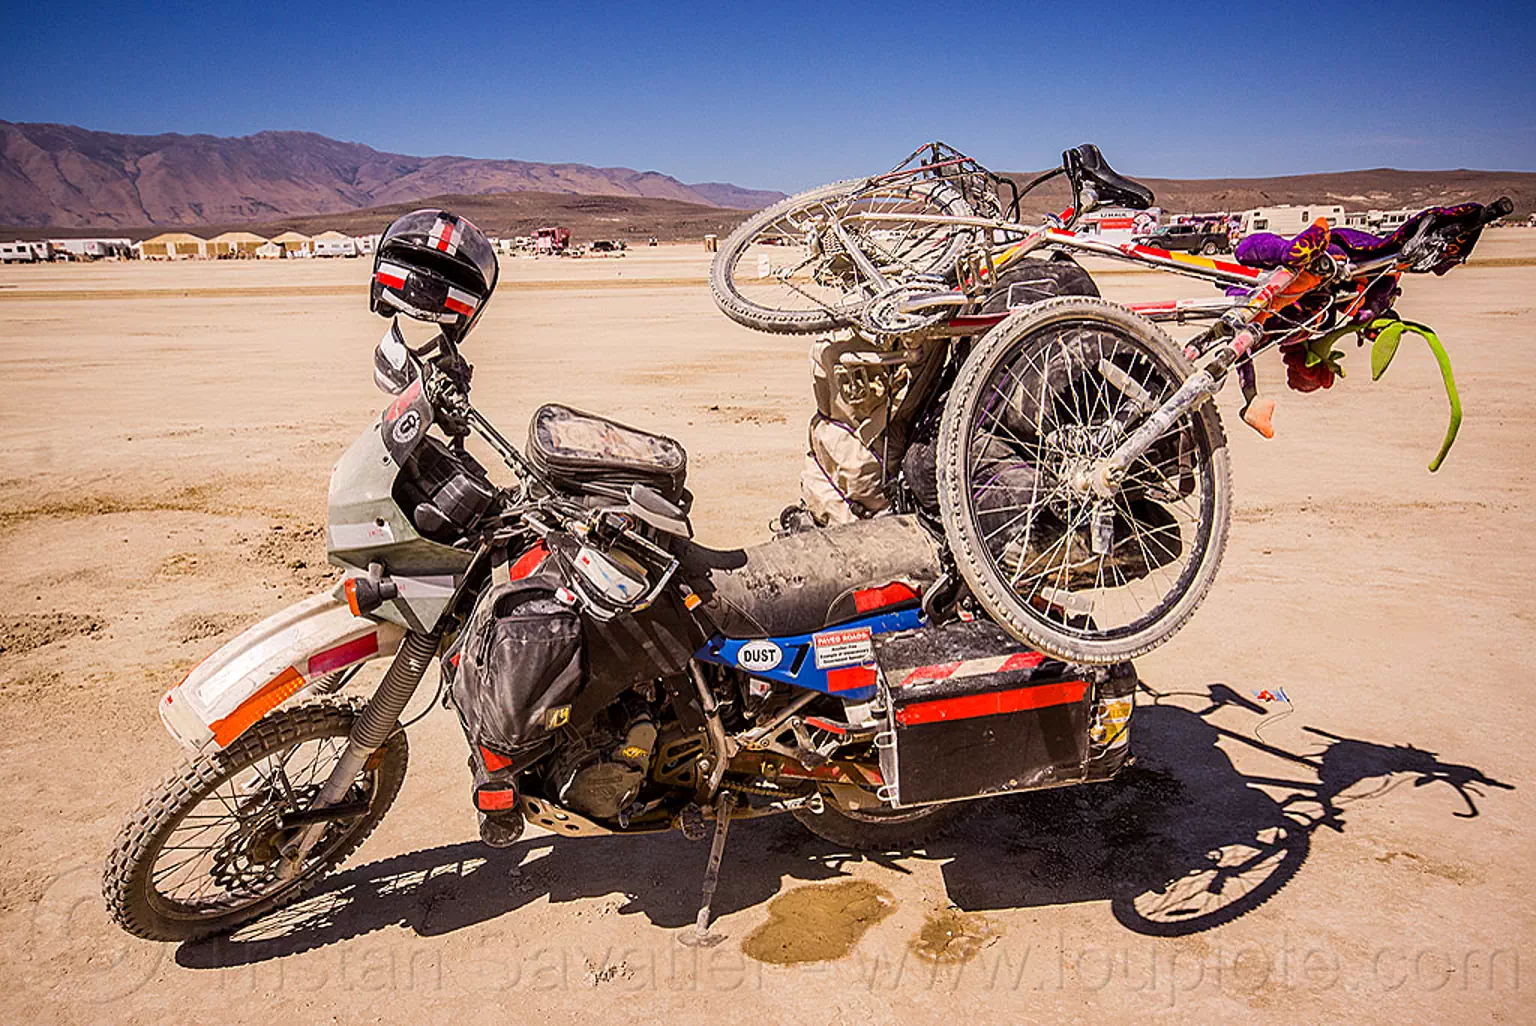 KLR 650 motorcycle in the desert - burning man 2015, bicycle, bike, burning man, dual-sport, duffle bags, helmet, kawasaki, klr 650, luggage, motorcycle touring, overloaded, panniers, tank bag